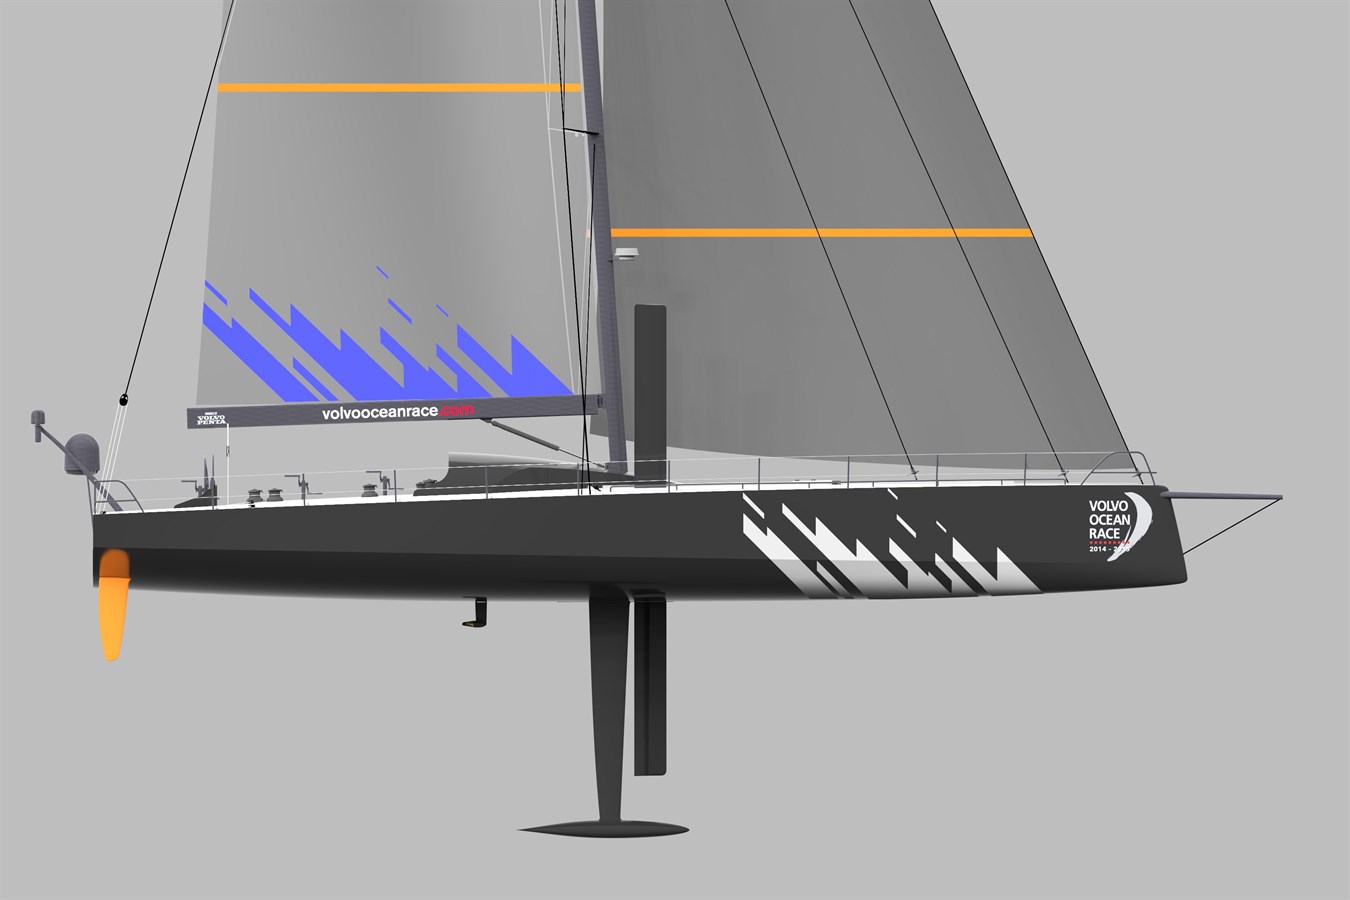 "Le design du futur bateau de la Volvo Ocean Race"